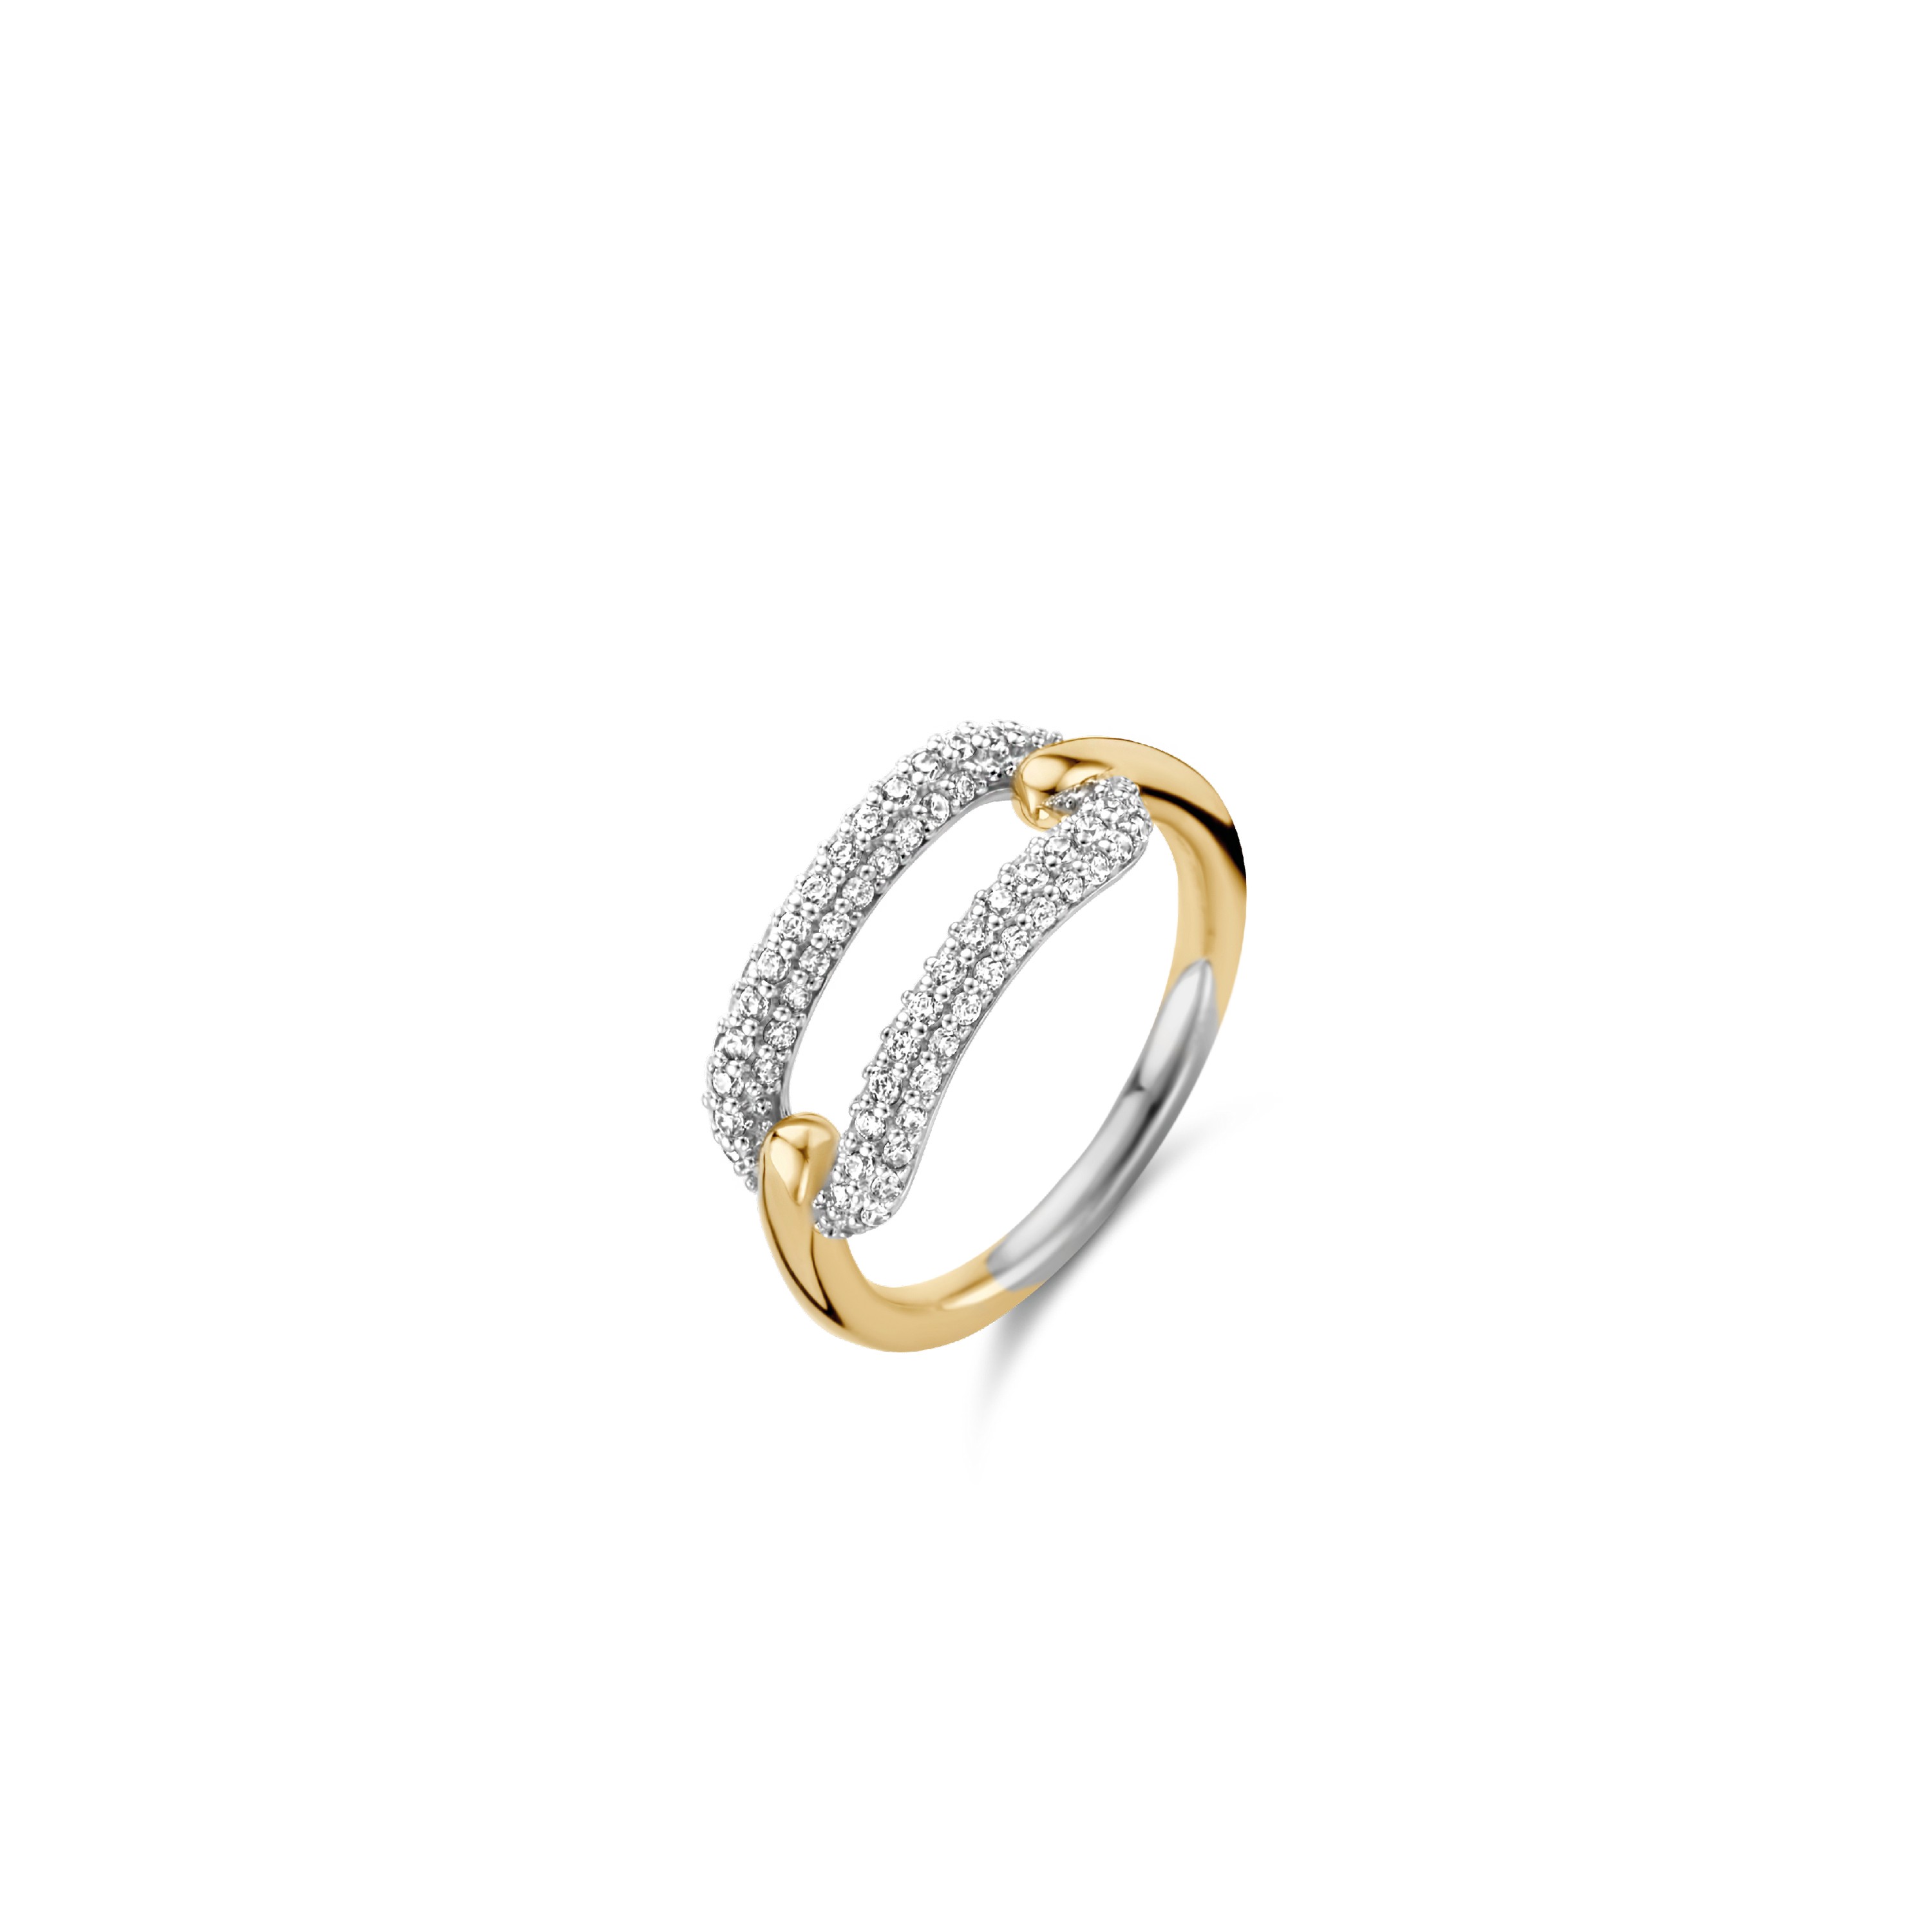 TI SENTO - Milano Ring 12228ZY Gala Jewelers Inc. White Oak, PA